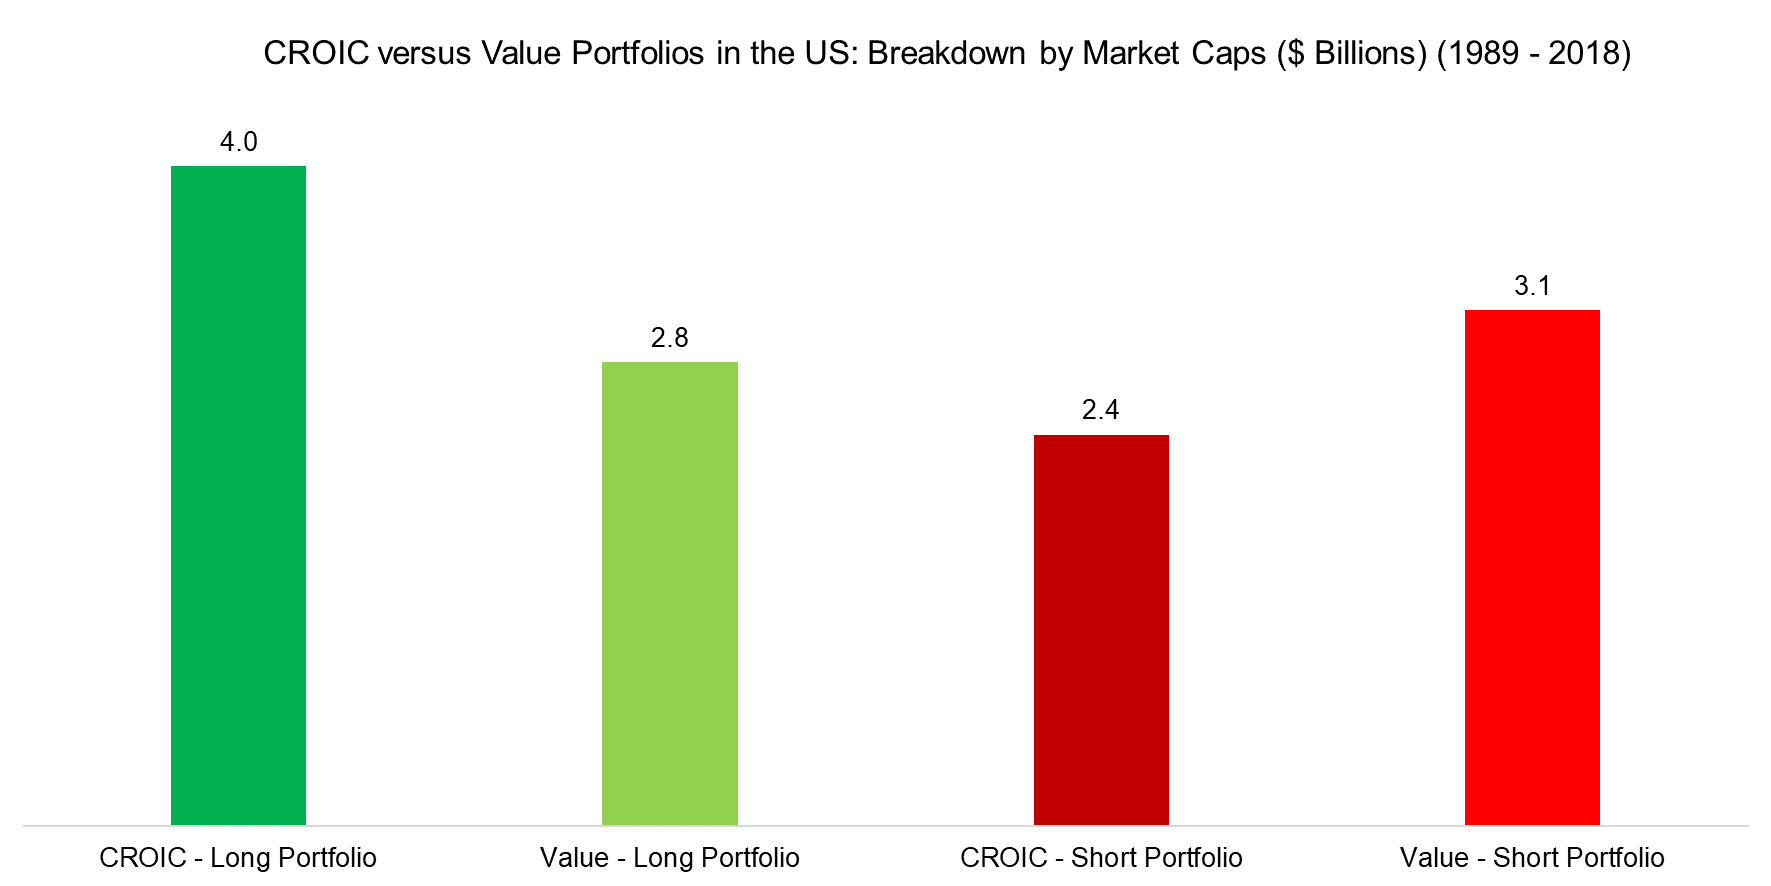 CROIC versus Value Portfolios in the US Breakdown by Market Caps ($ Billions) (1989 - 2018)